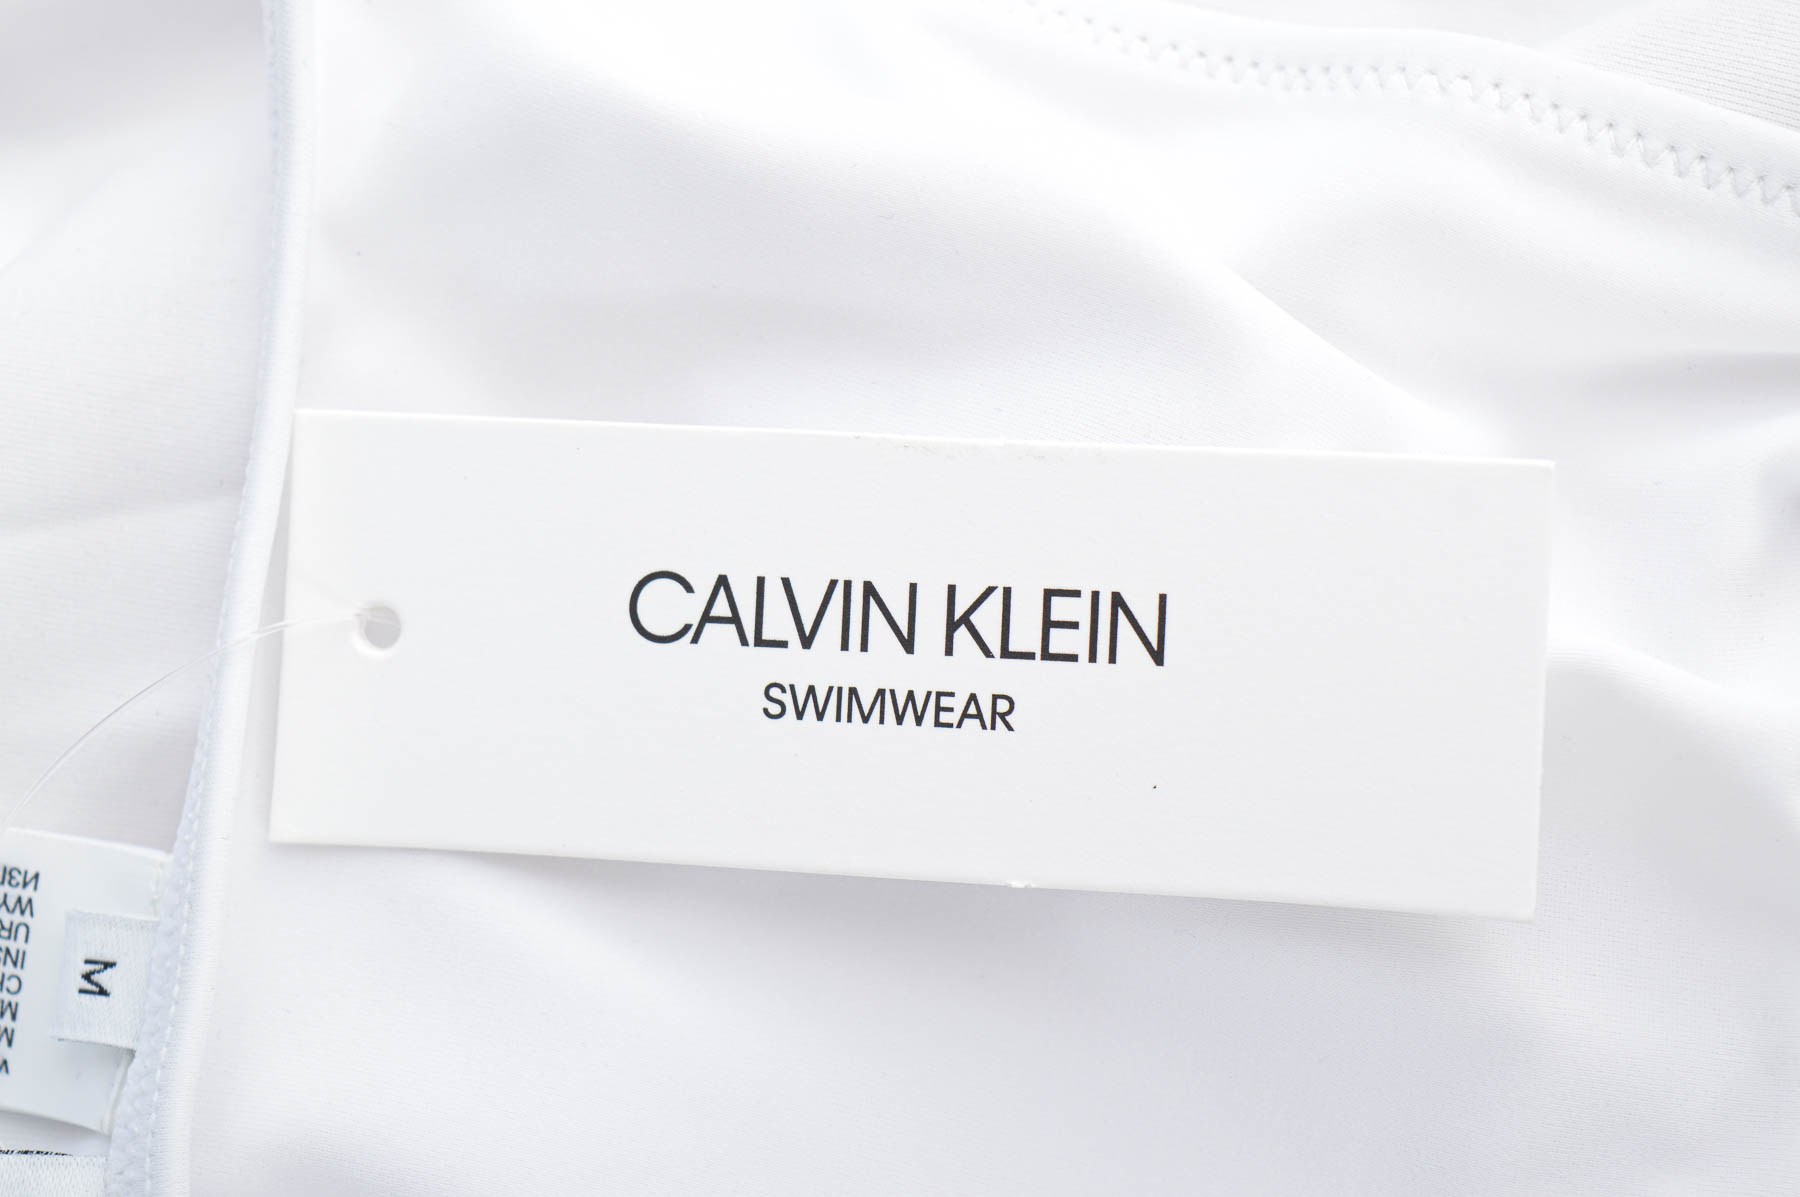 Women's swimsuit - CALVIN KLEIN SWIMWEAR - 2